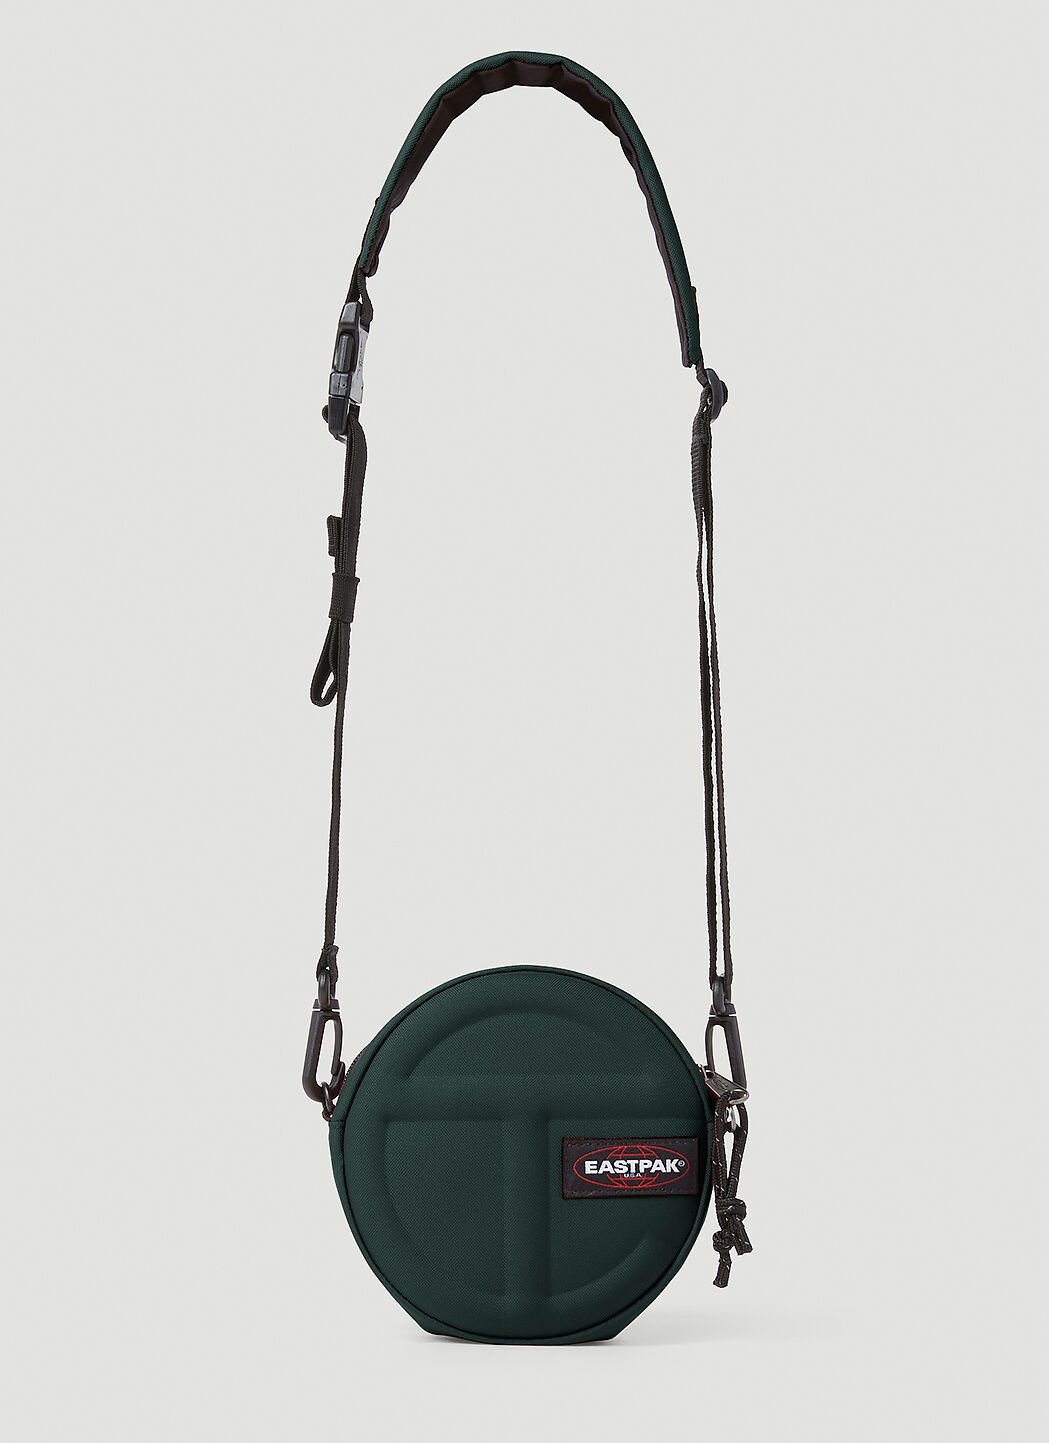 Eastpak x Telfar Circle Convertible Crossbody Bag 레드 est0353019